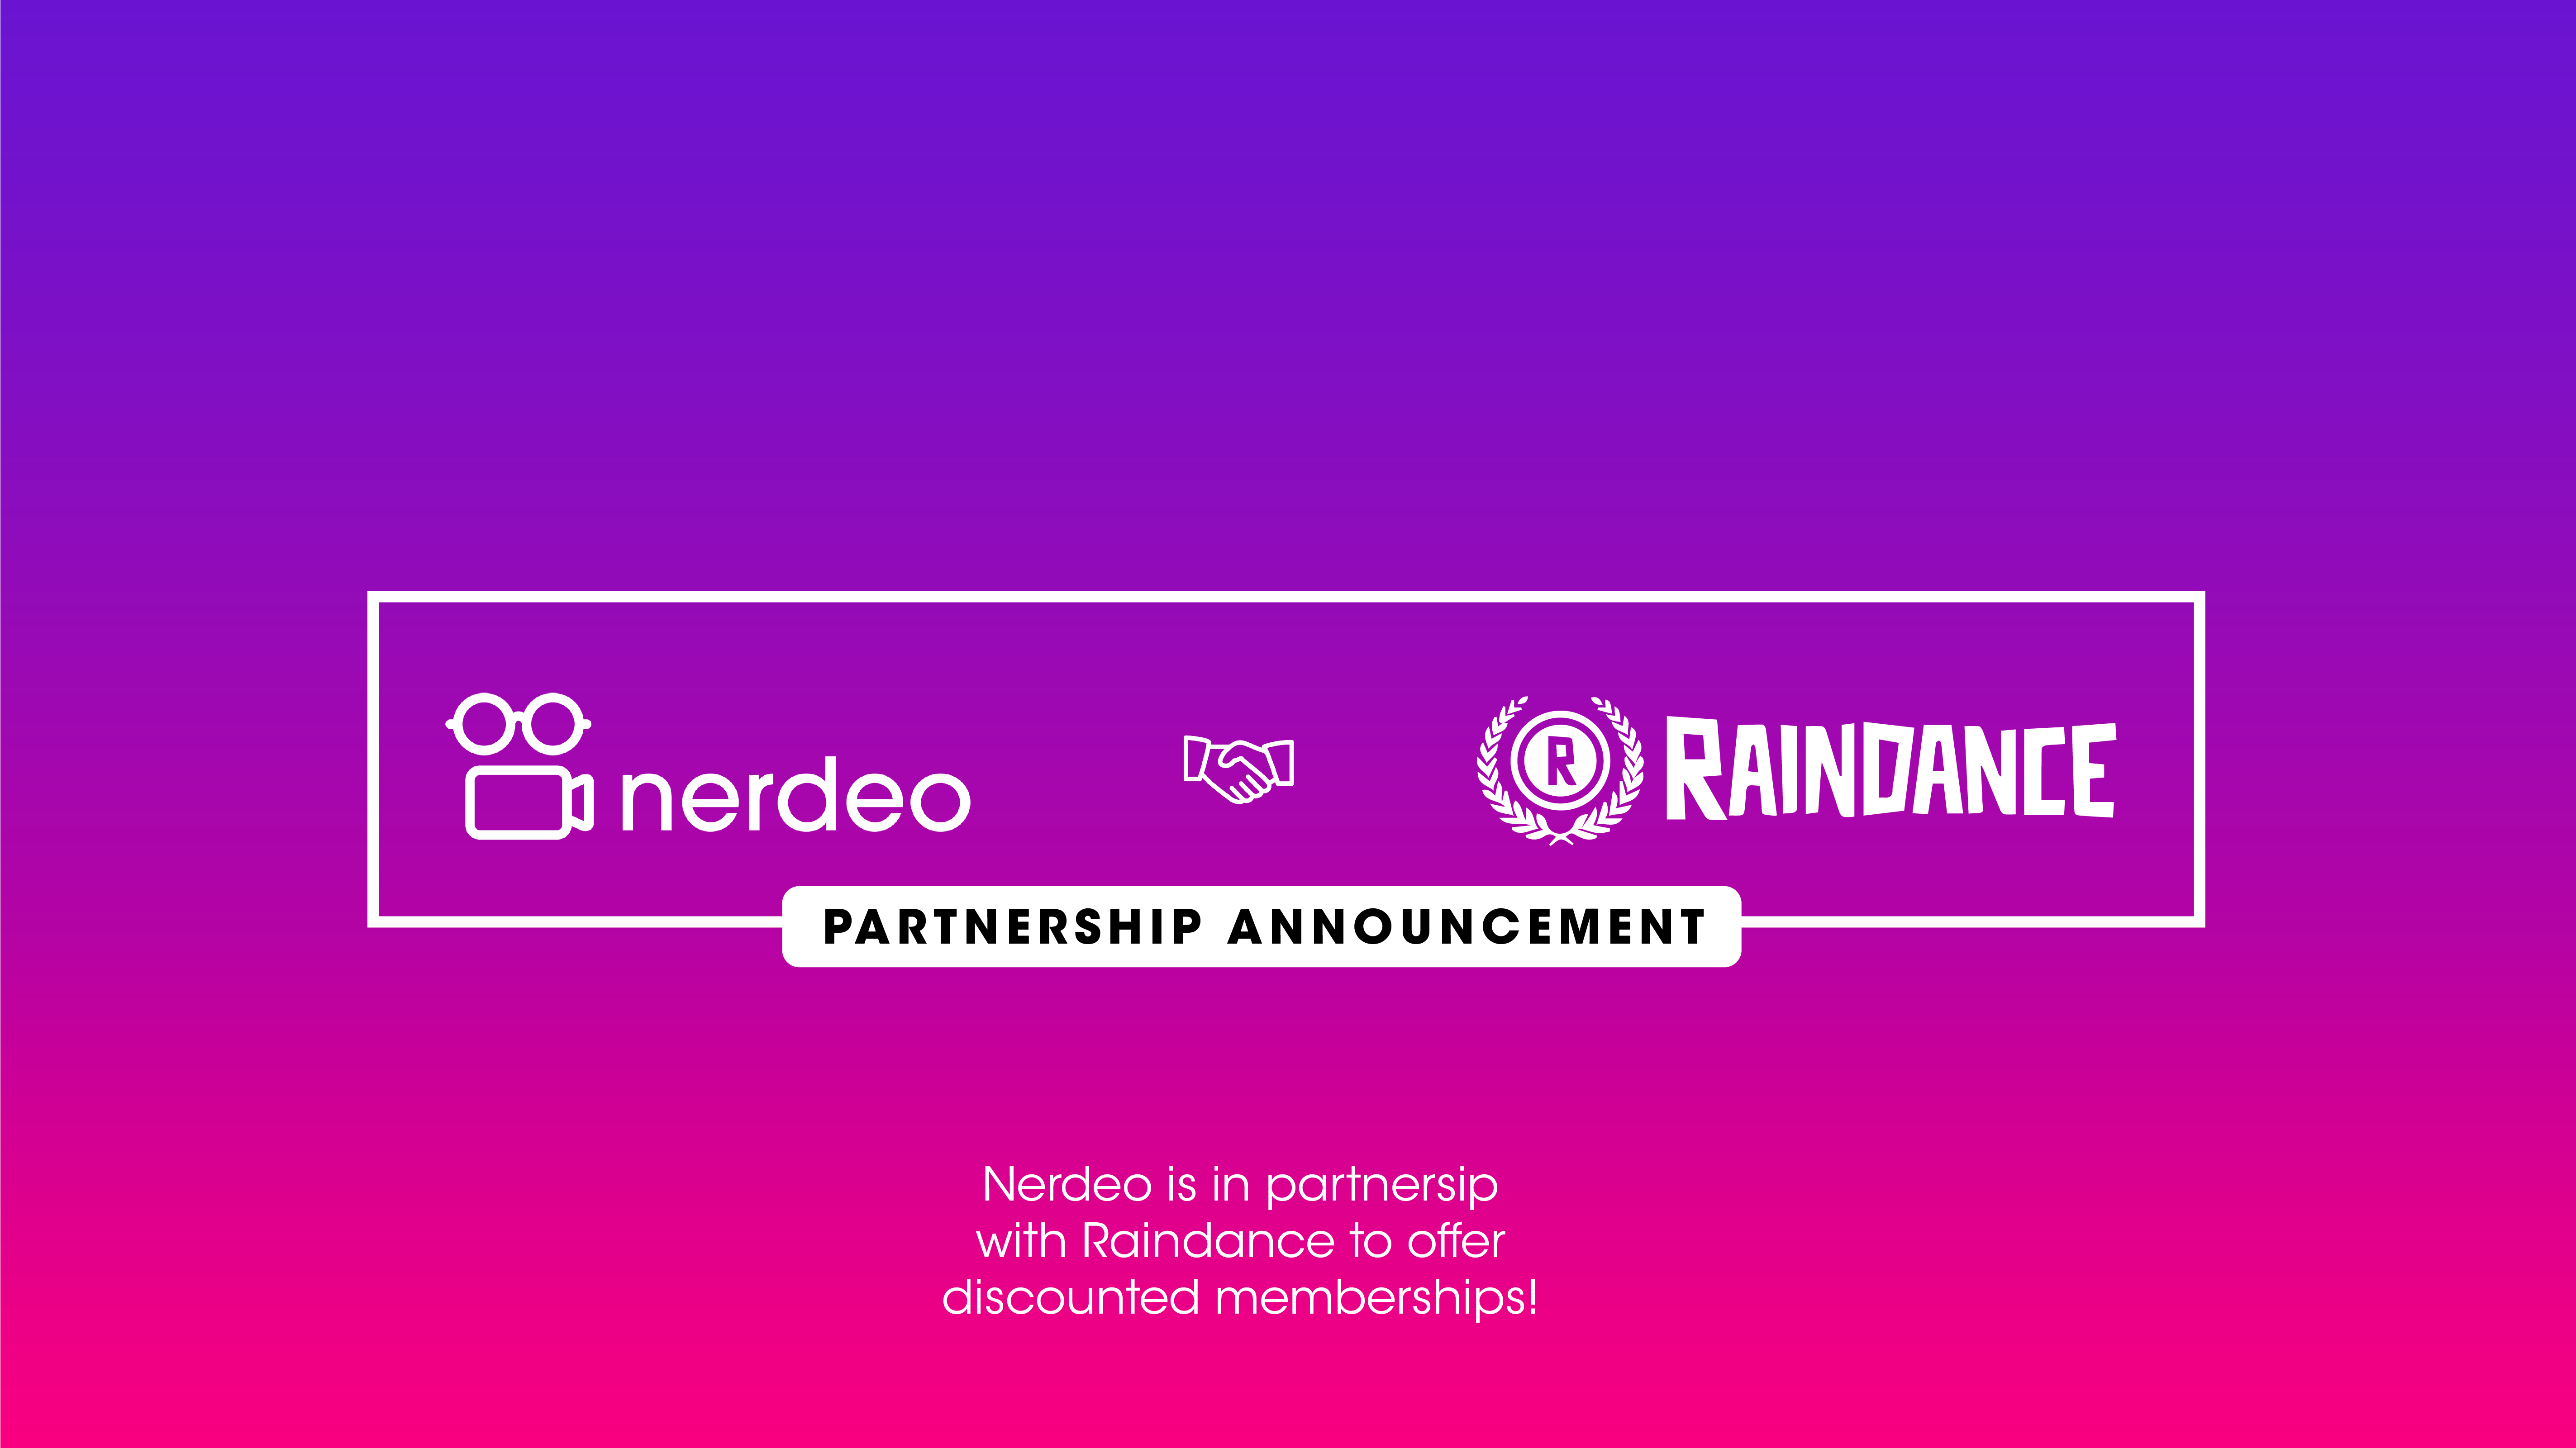 Raindance Membership Discounts For Nerdeo Users